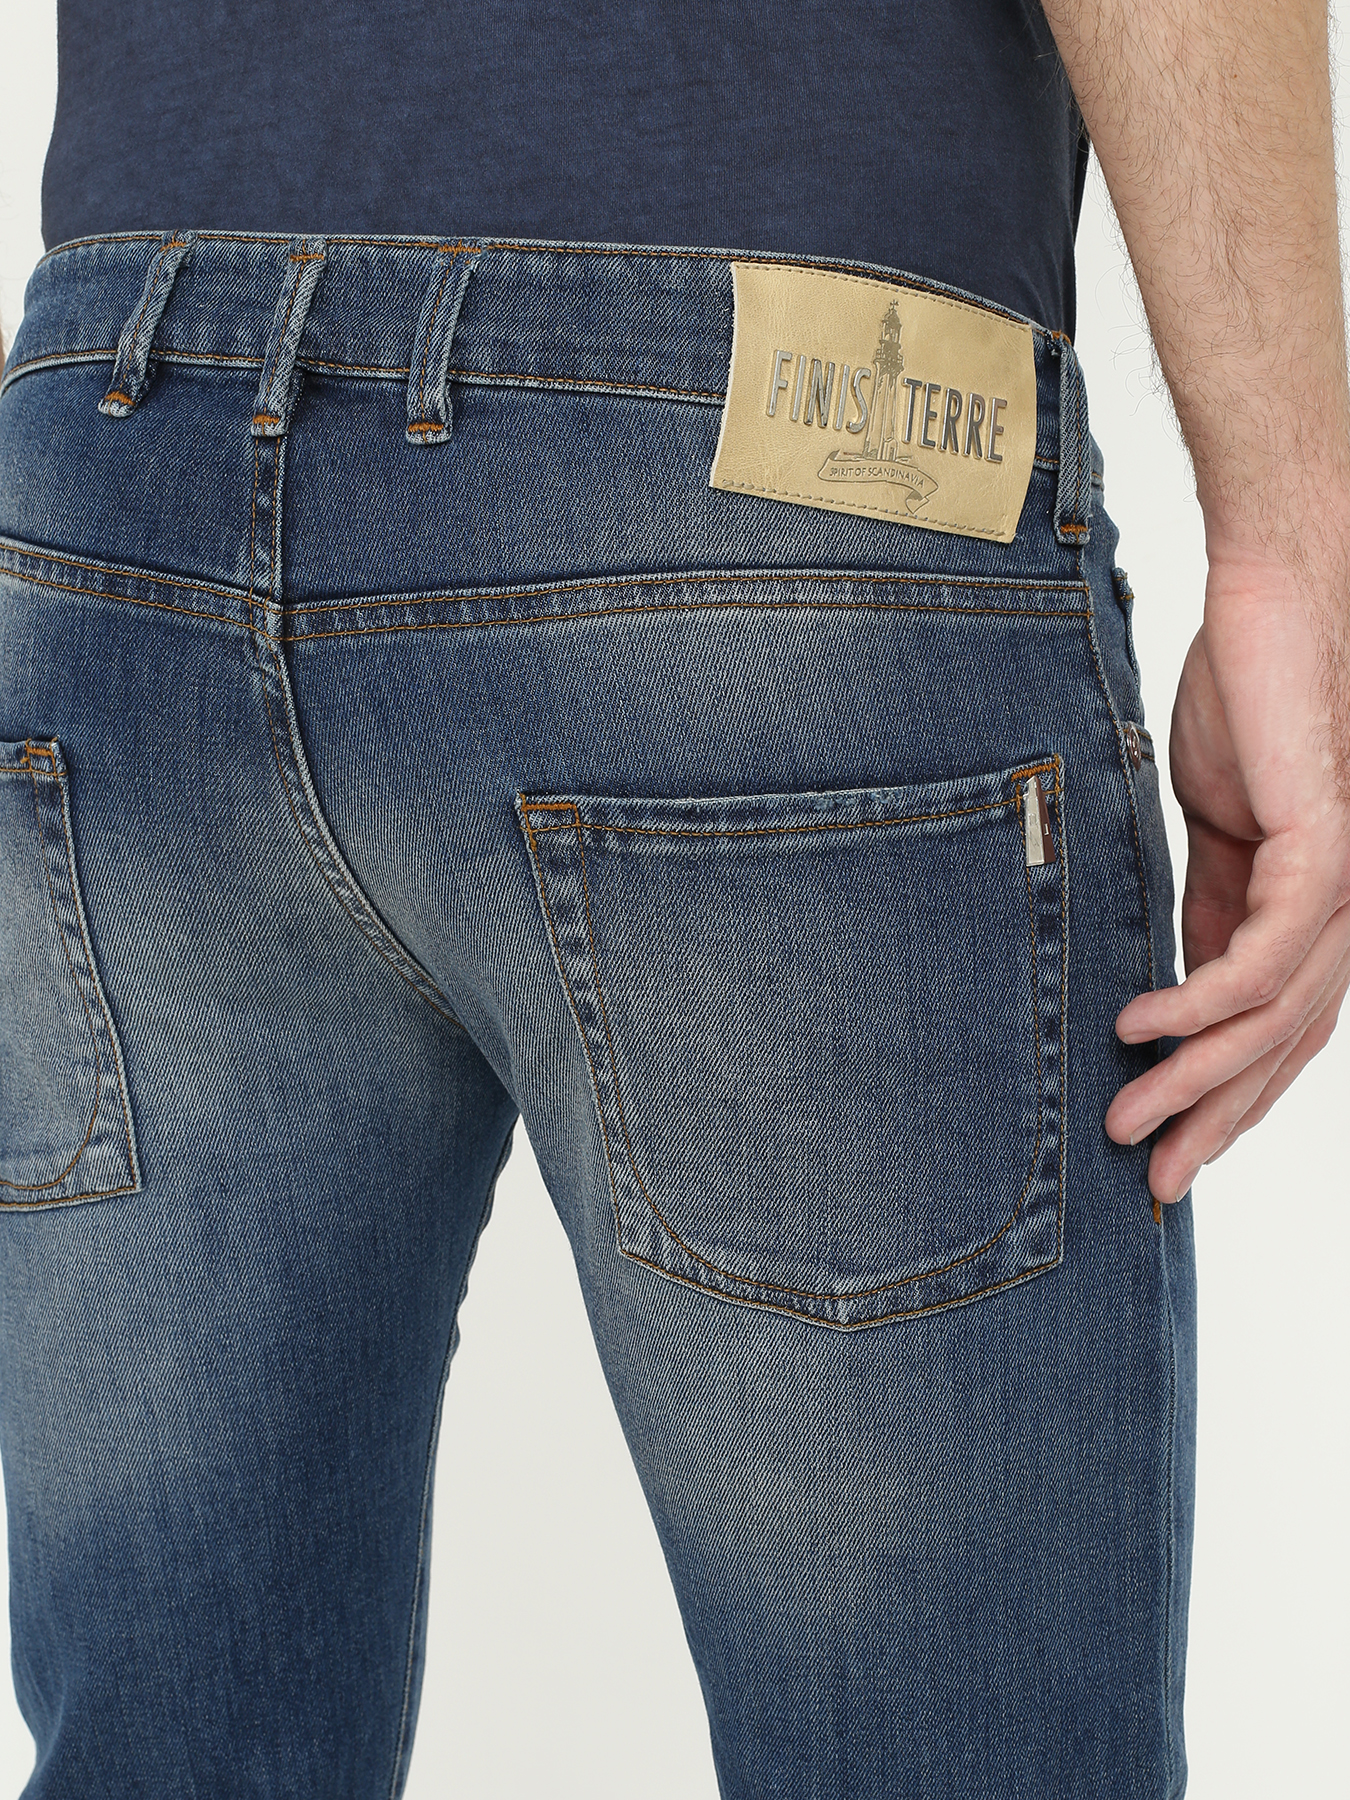 Finisterre Узкие мужские джинсы 322285-012 Фото 4